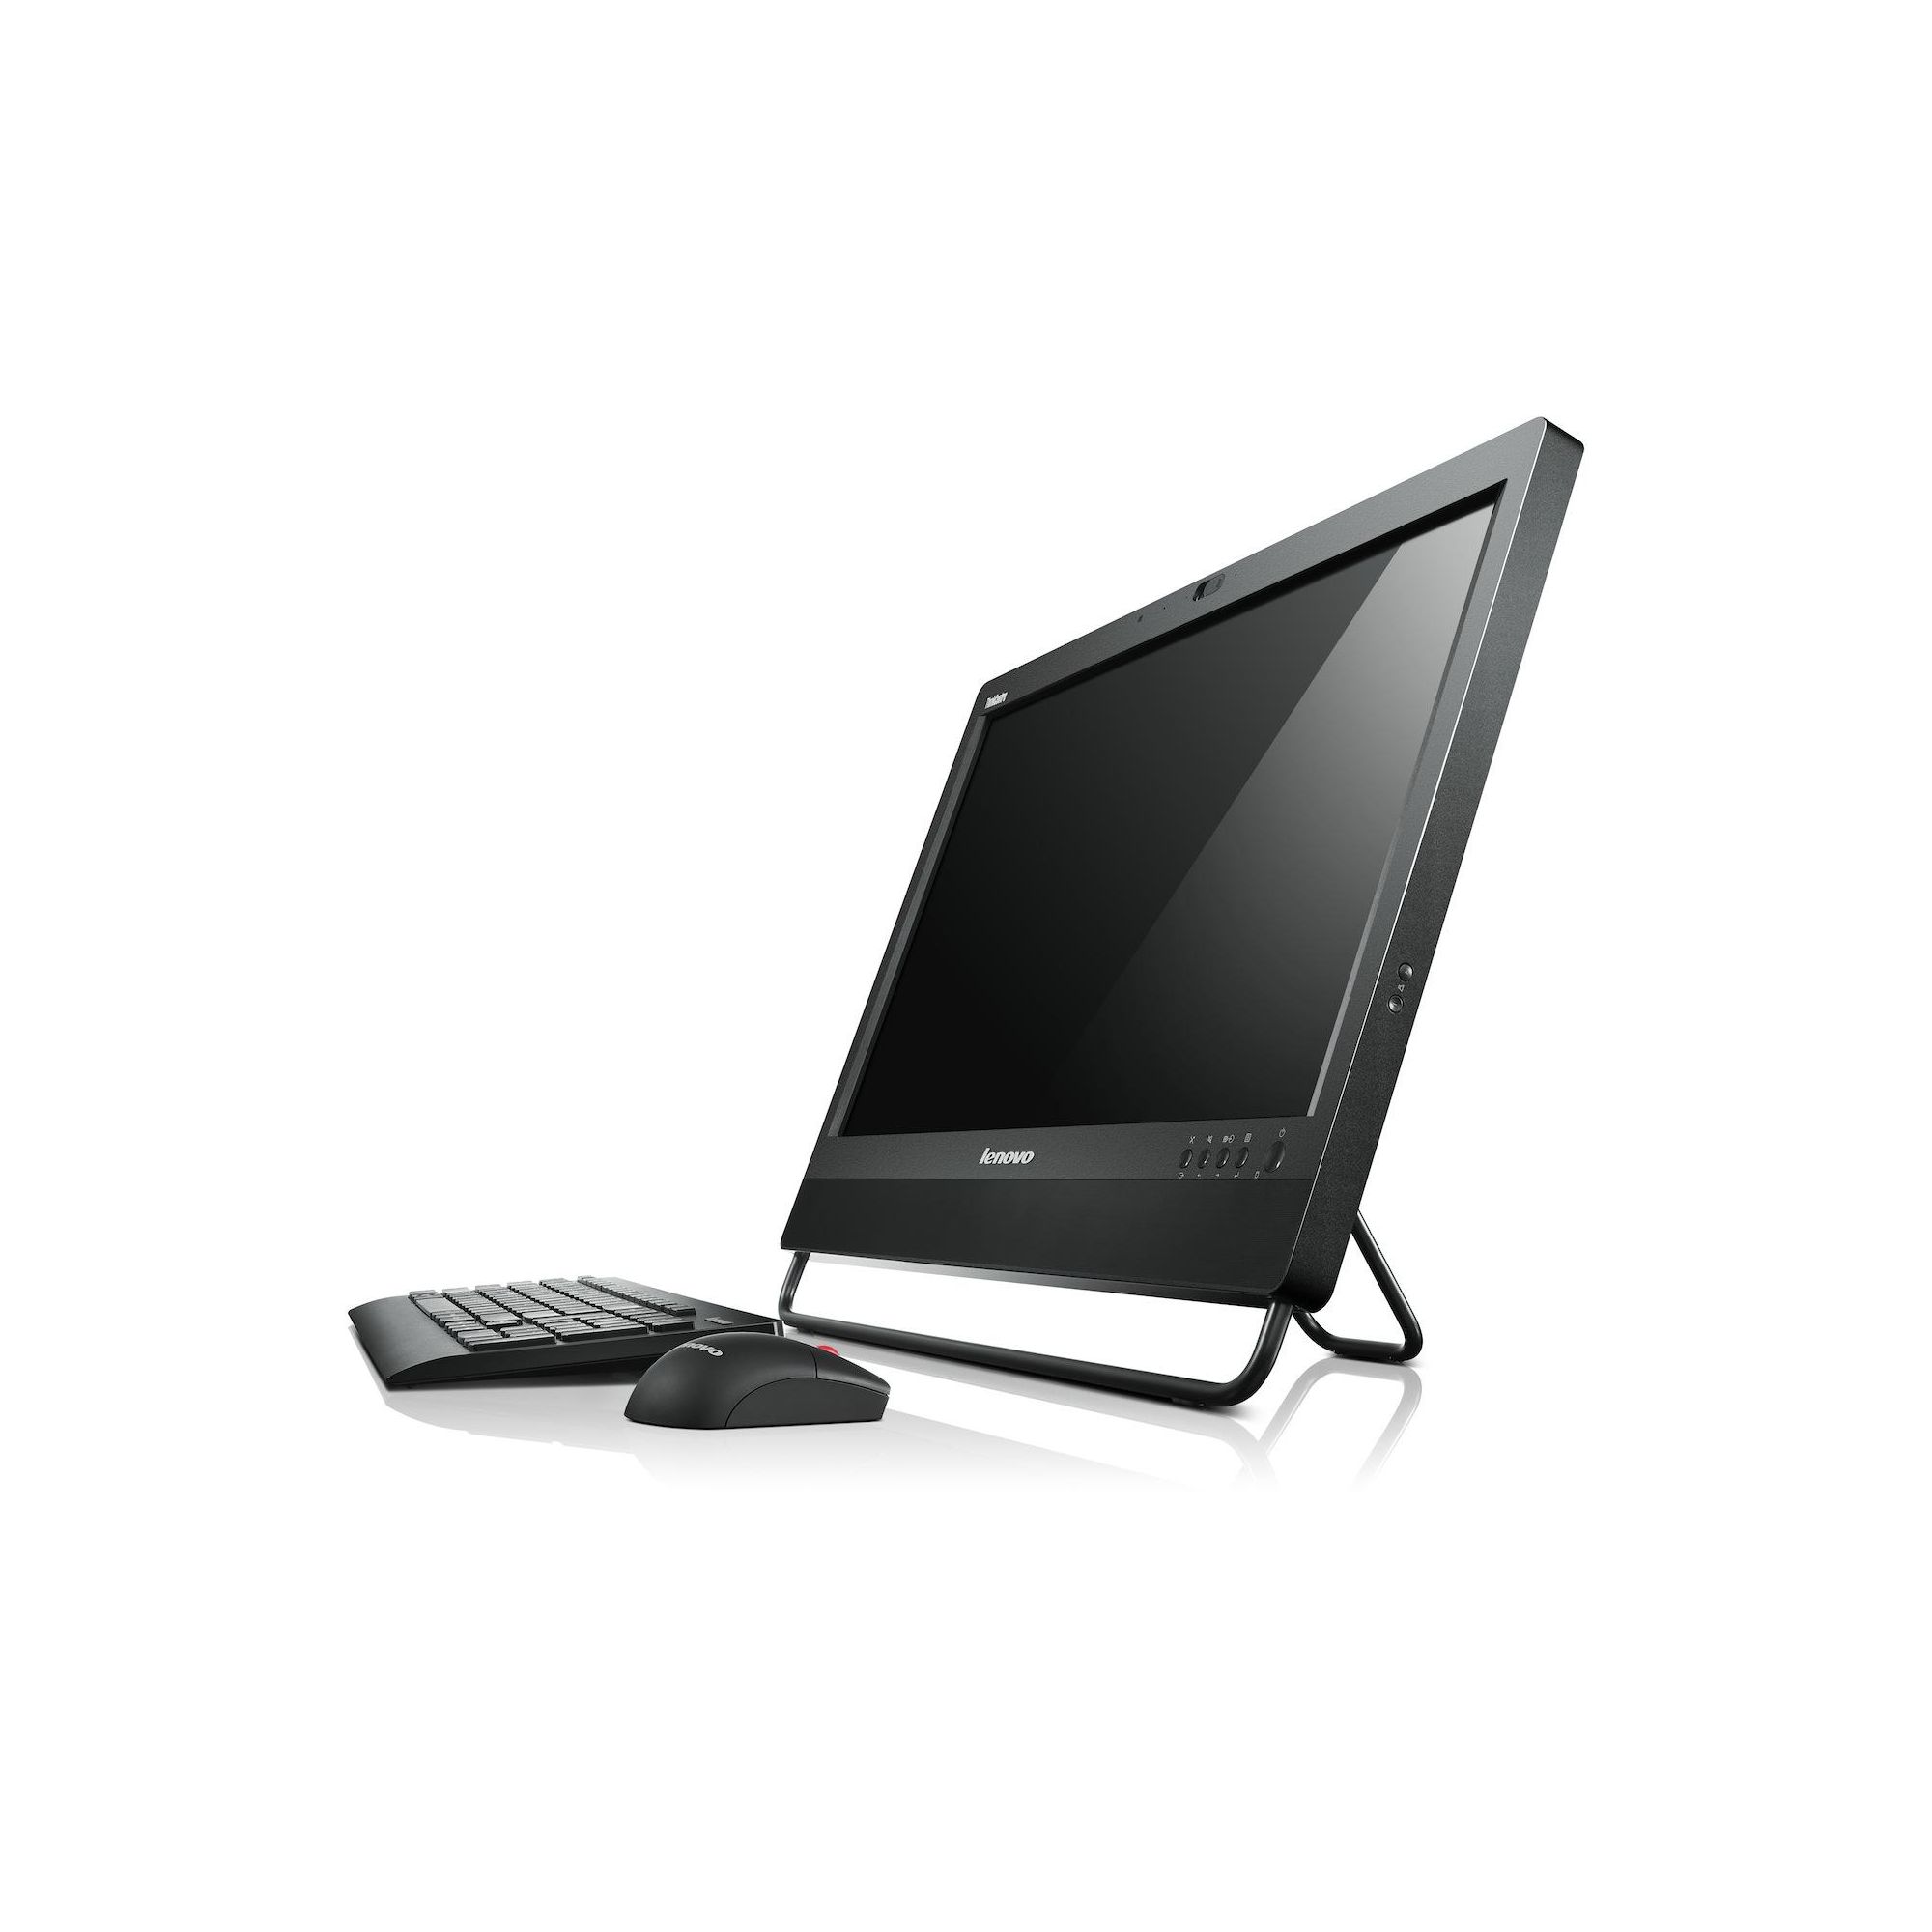 Lenovo ThinkCentre M92z 3318F8G (23 inch) All-In-One Desktop PC Core i3 (3220) 3.3GHz 4GB (1x4GB) 500GB DVD?RW LAN Webcam Windows 7 Pro